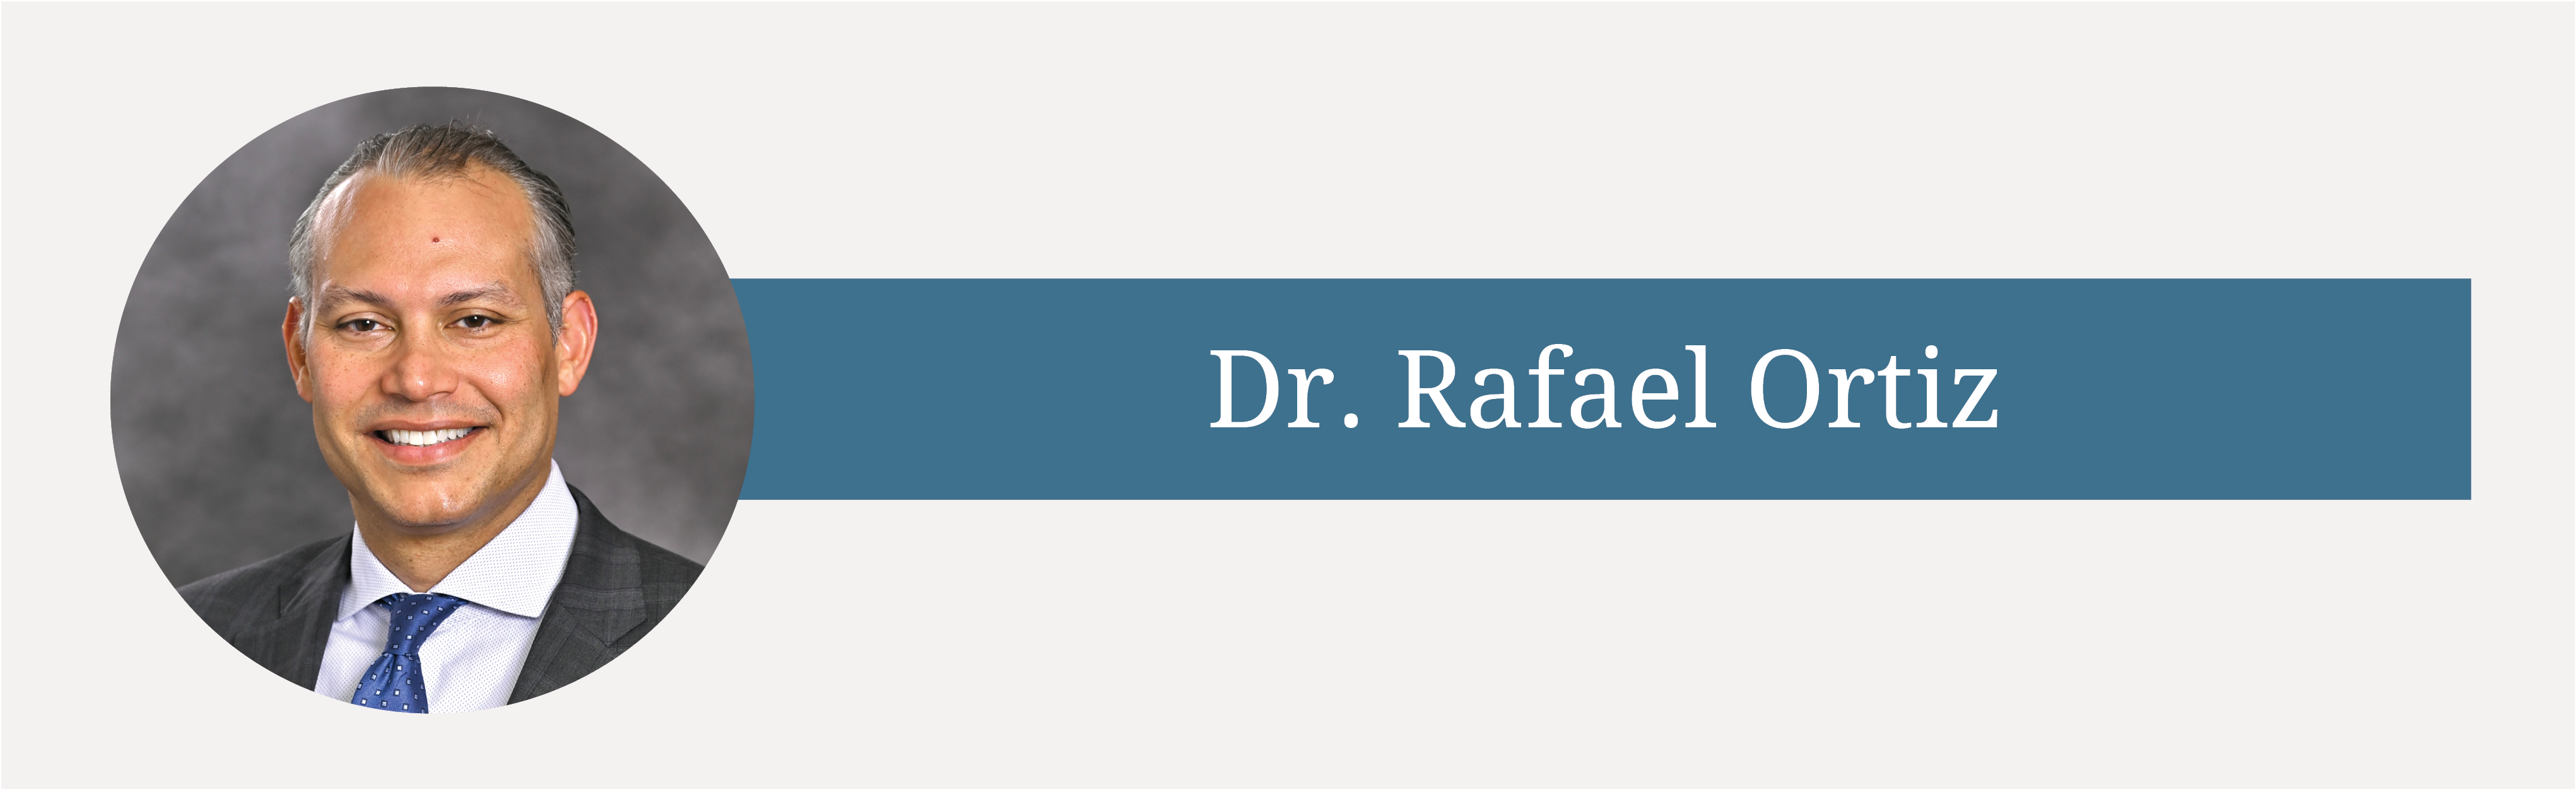 Dr. Rafael A. Ortiz Joins White Plains Hospital as Executive Director of Neurosciences